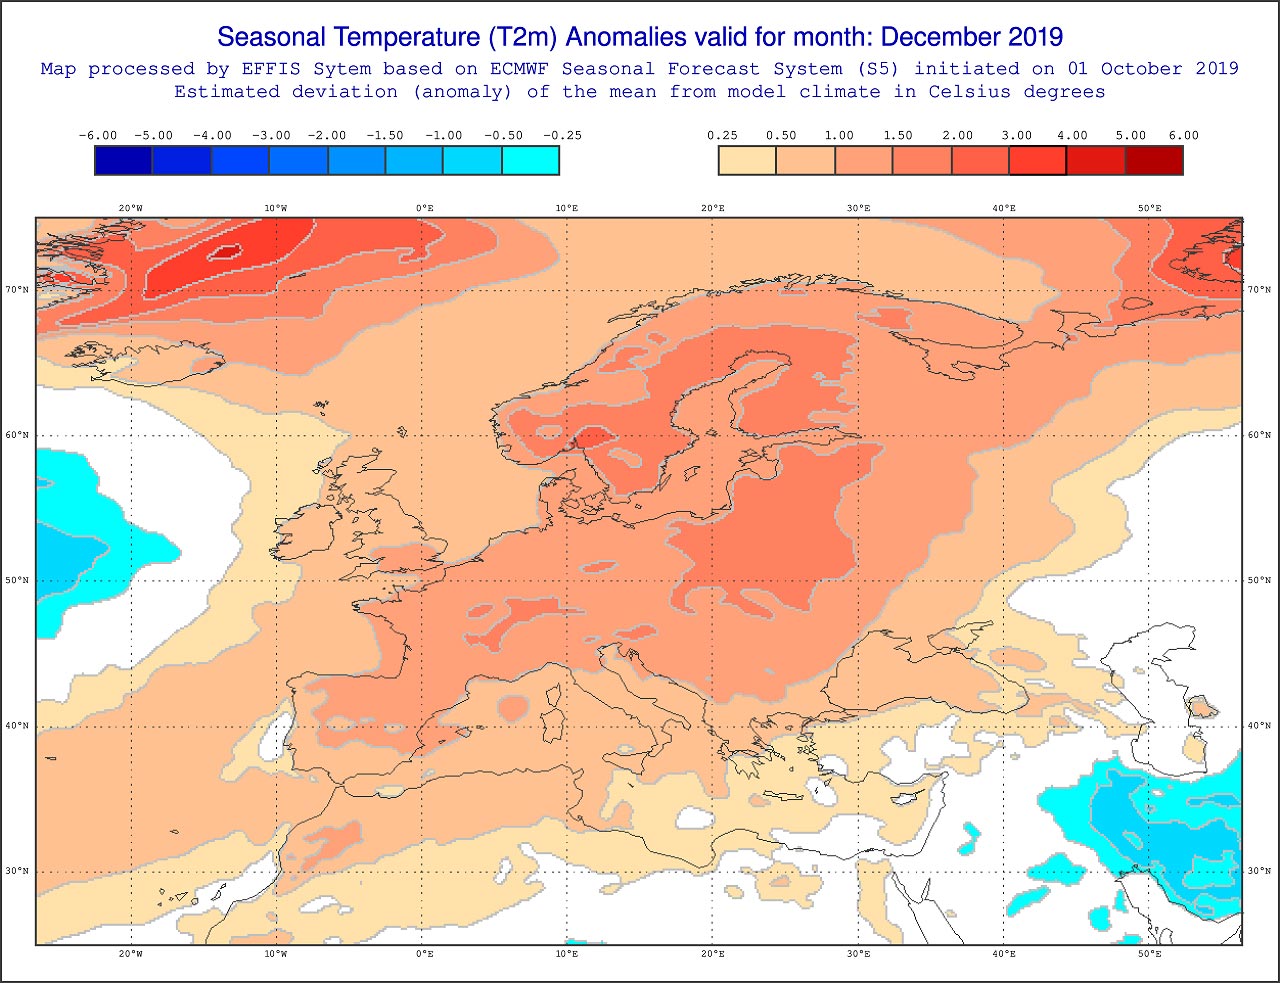 Tendenza meteo Dicembre 2019 - effis.jrc.ec.europa.eu.jpg